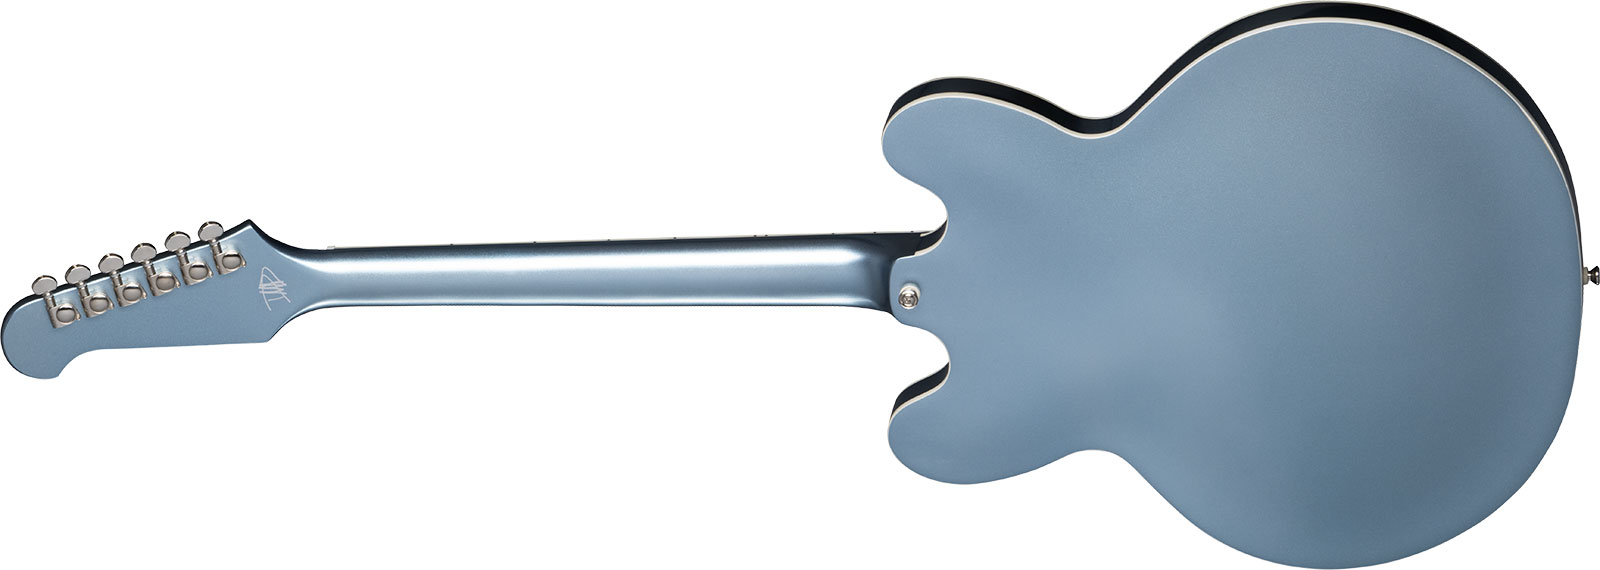 Epiphone Dave Grohl Dg-335 Signature 2h Ht Lau - Pelham Blue - Semi hollow elektriche gitaar - Variation 1